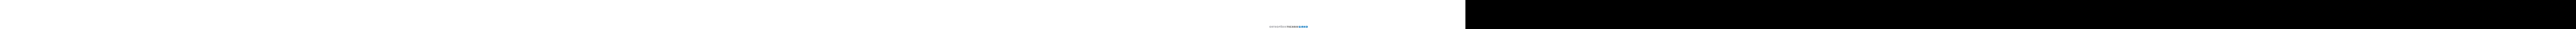 Orthopädie-Technik Helmut Ginko GmbH